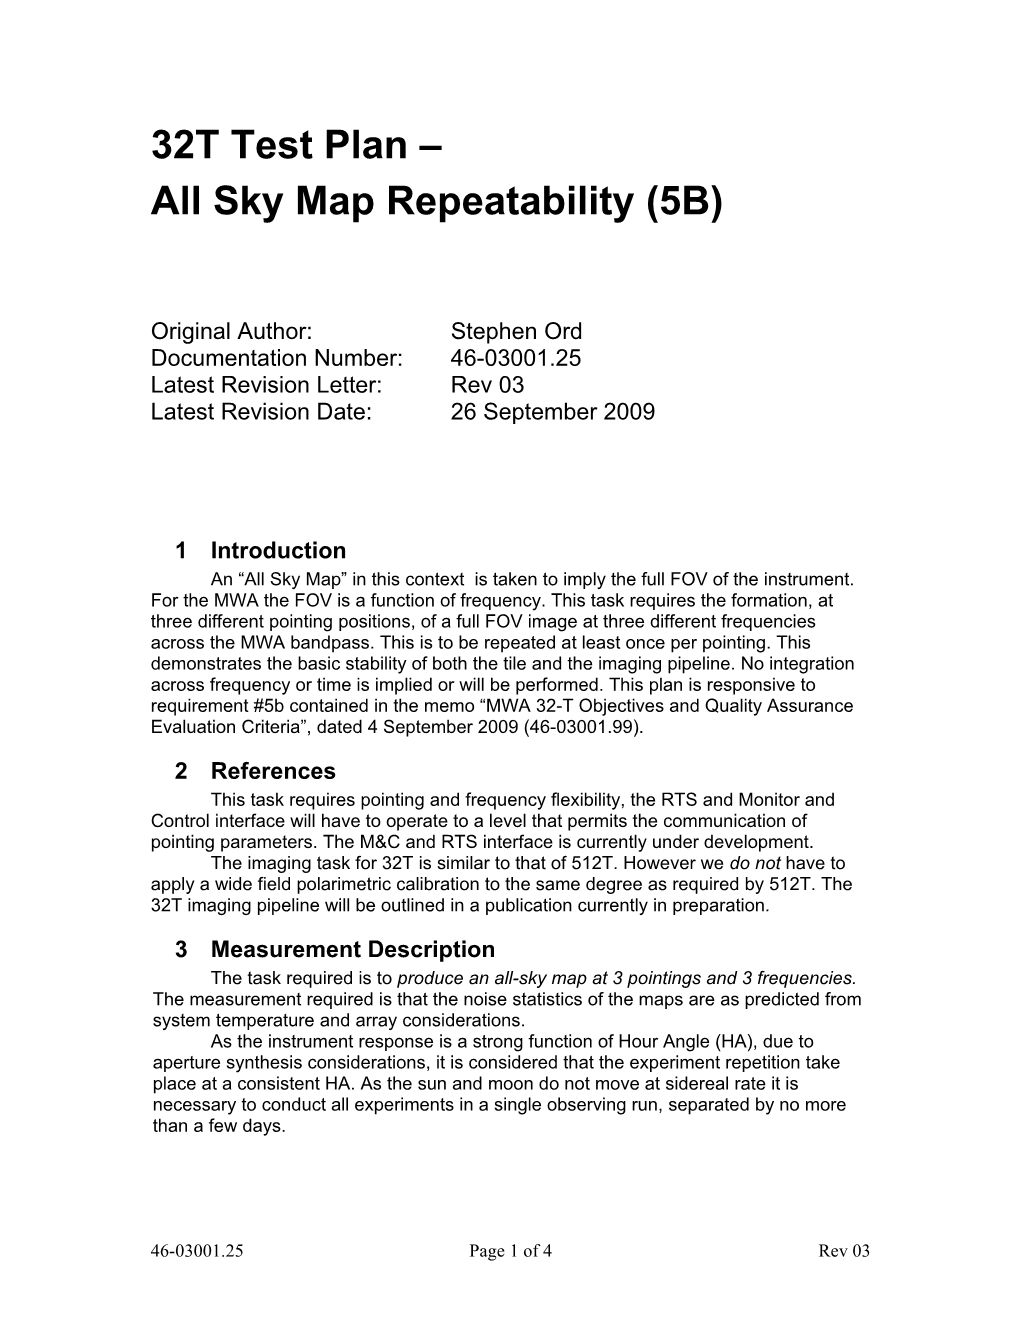 All Sky Map Repeatability (5B)